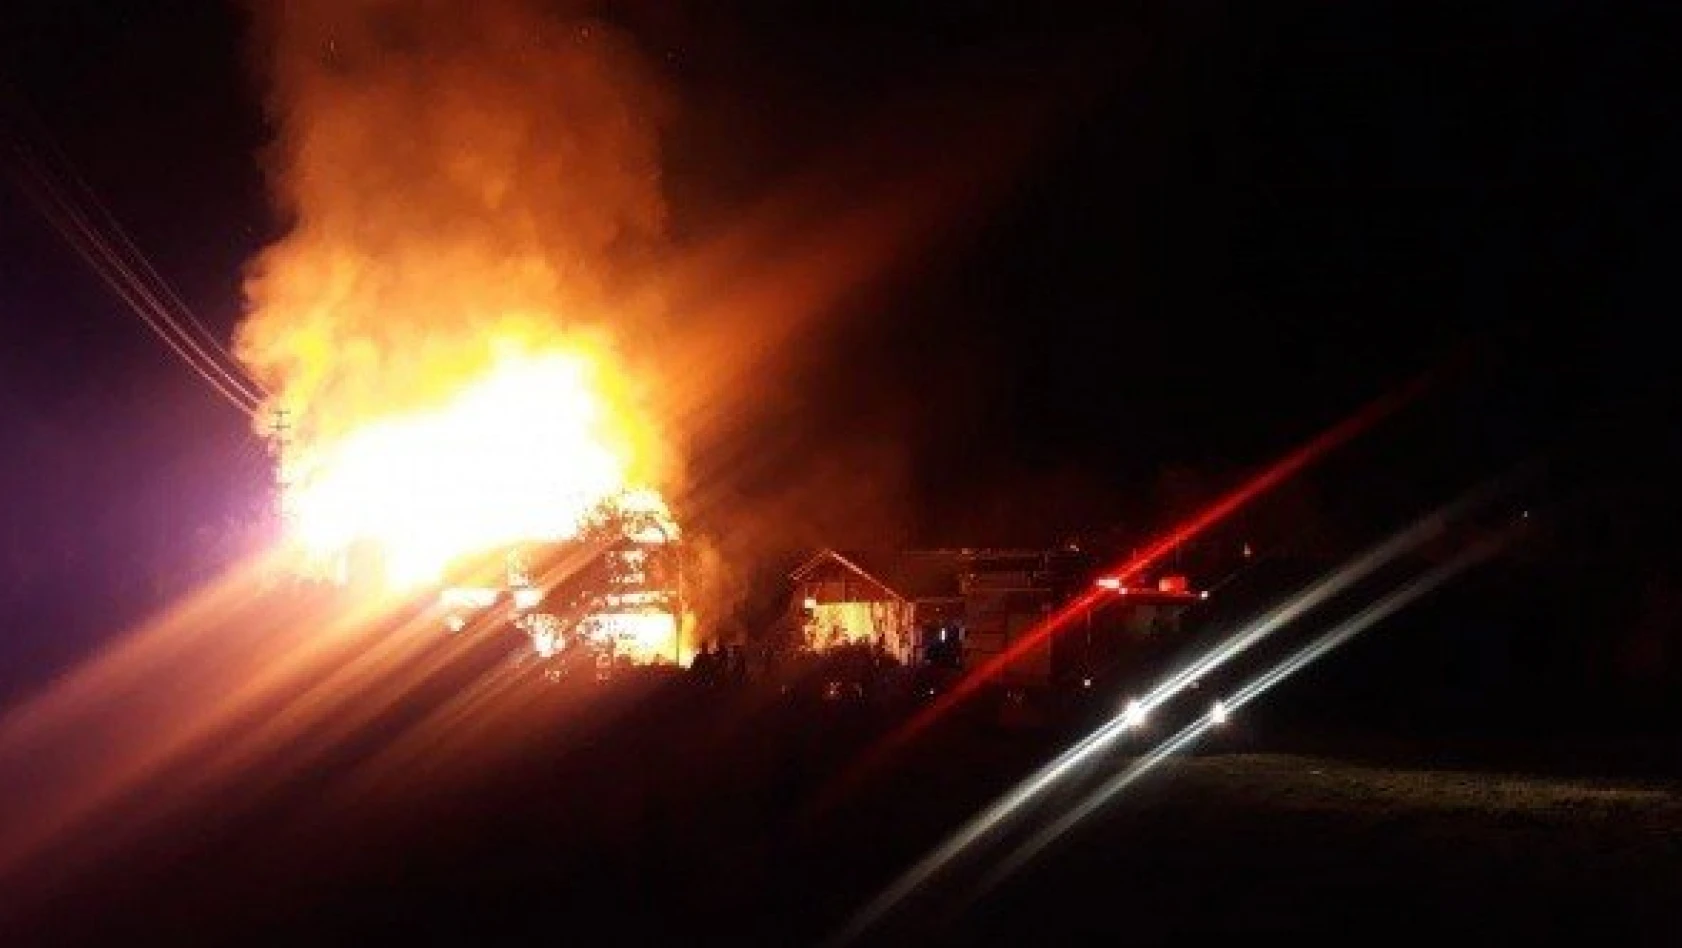 İhsangazi'de iki katlı ahşap ev yandı